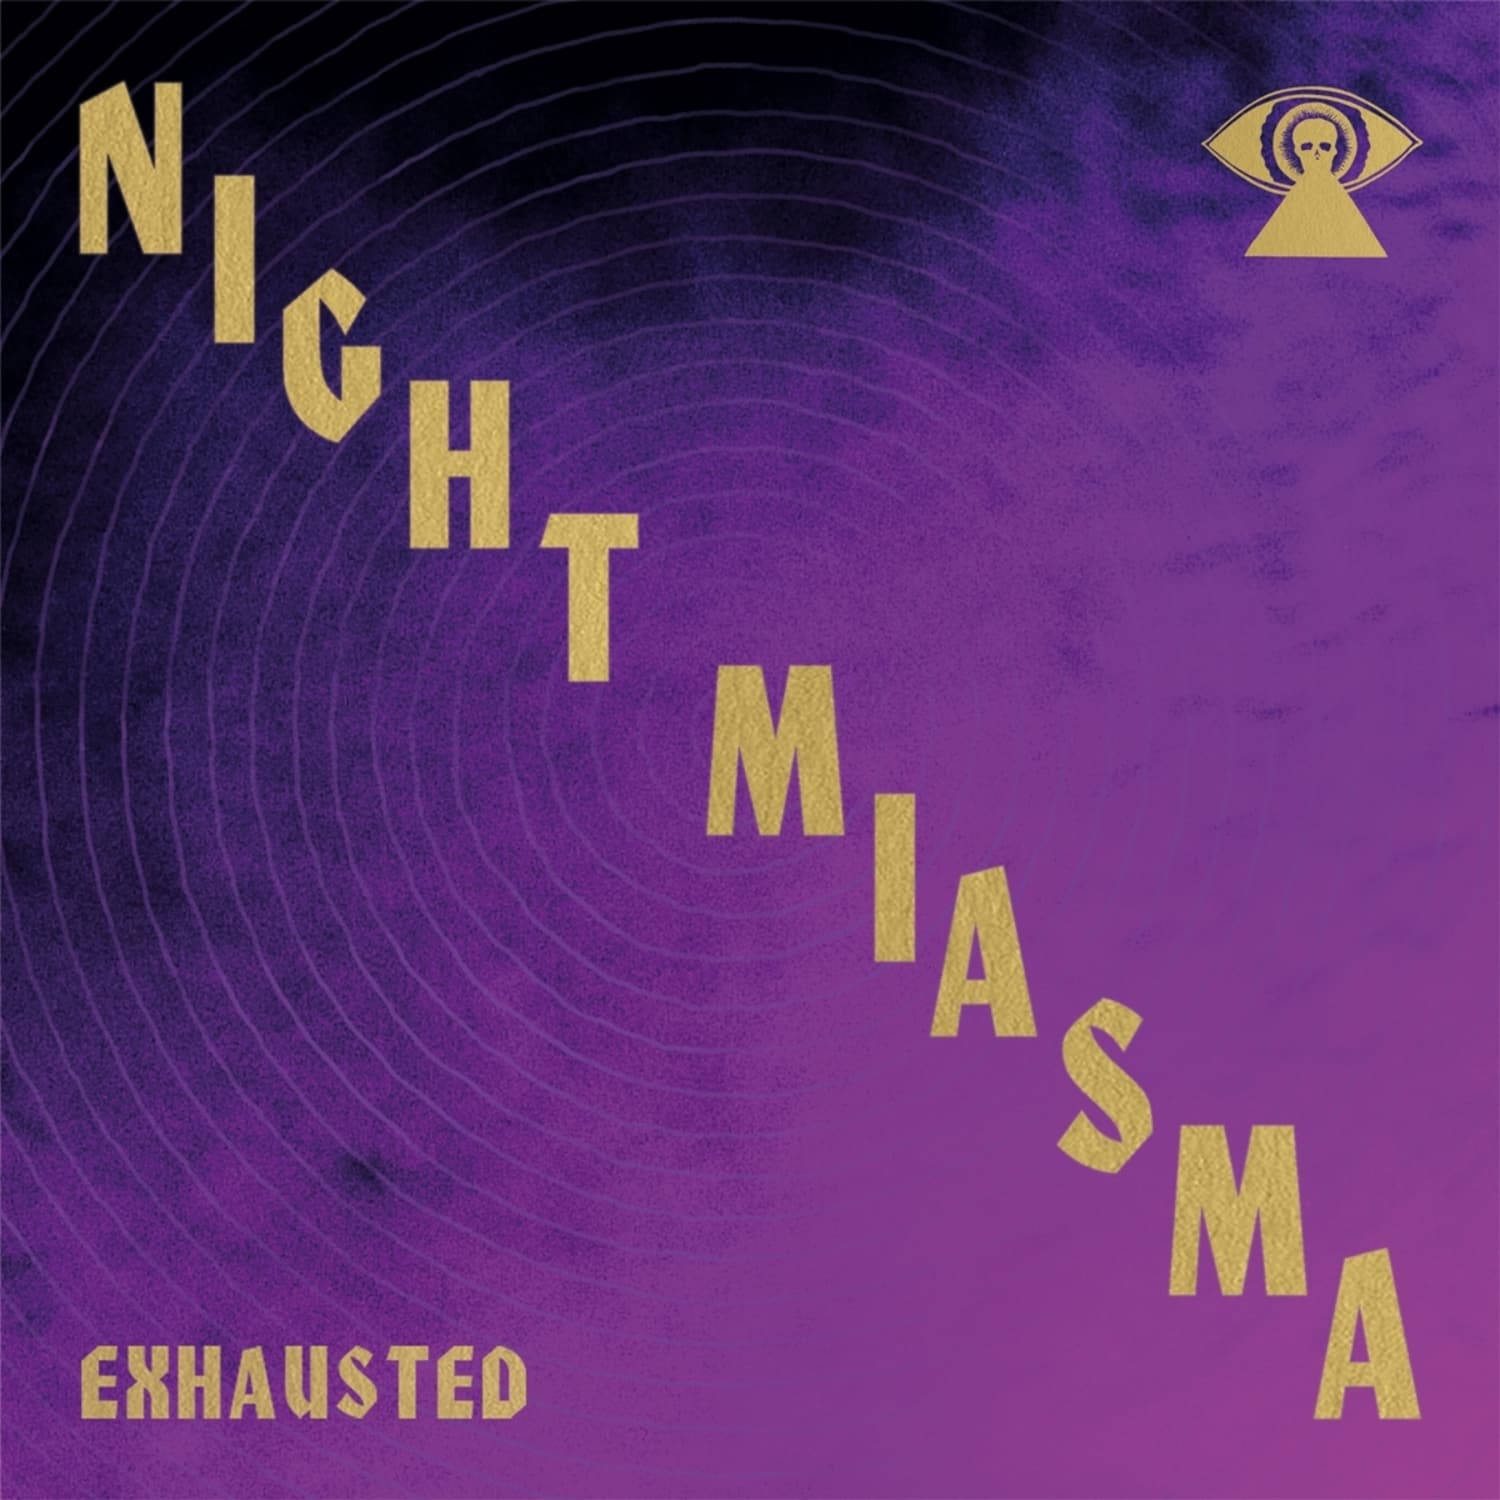 Night Miasma - EXHAUSTED 